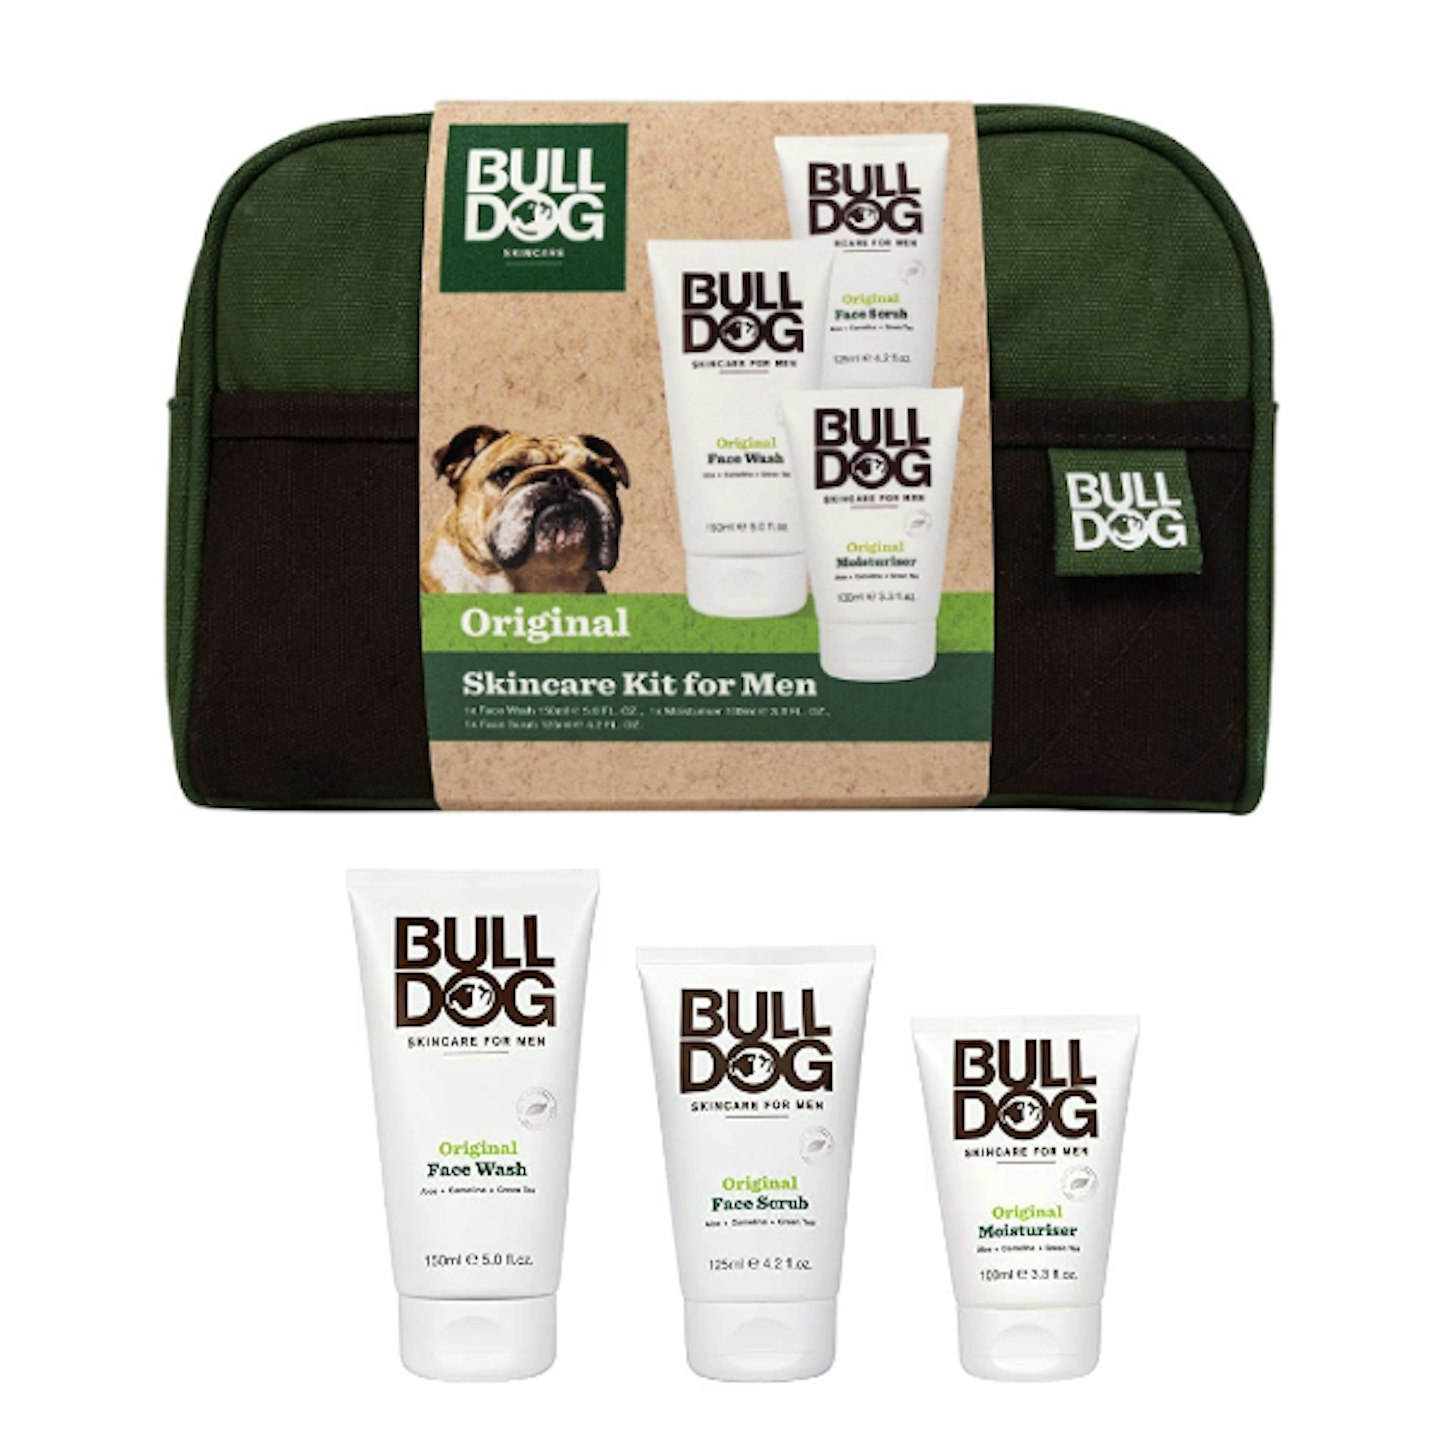 Bulldog Skincare: Original Skincare Kit